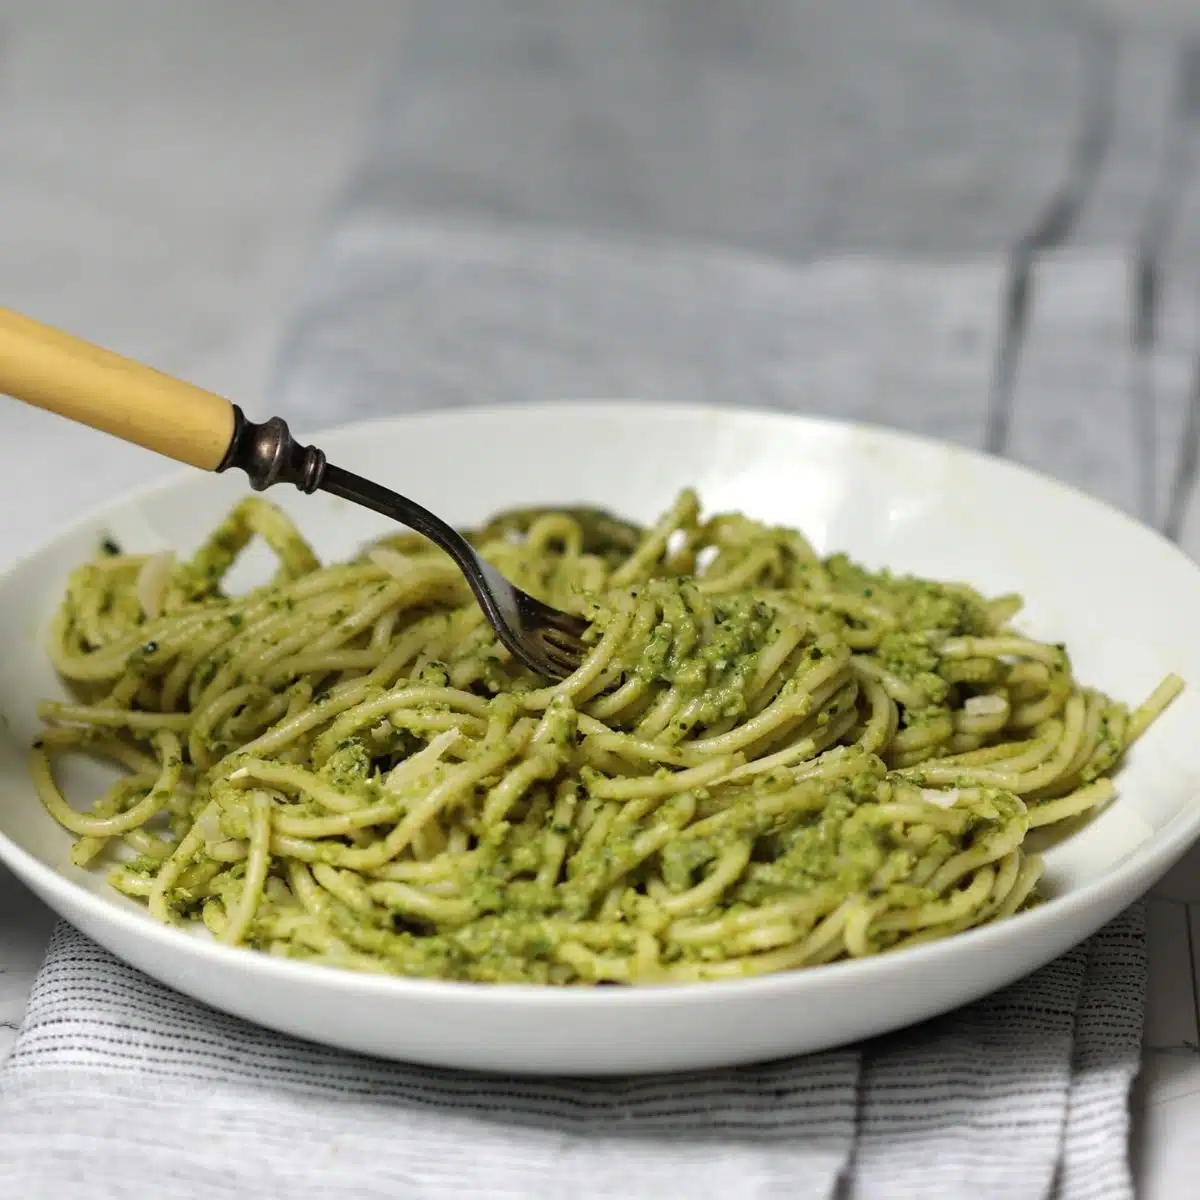 Plate with asparagus pesto and spaghetti.